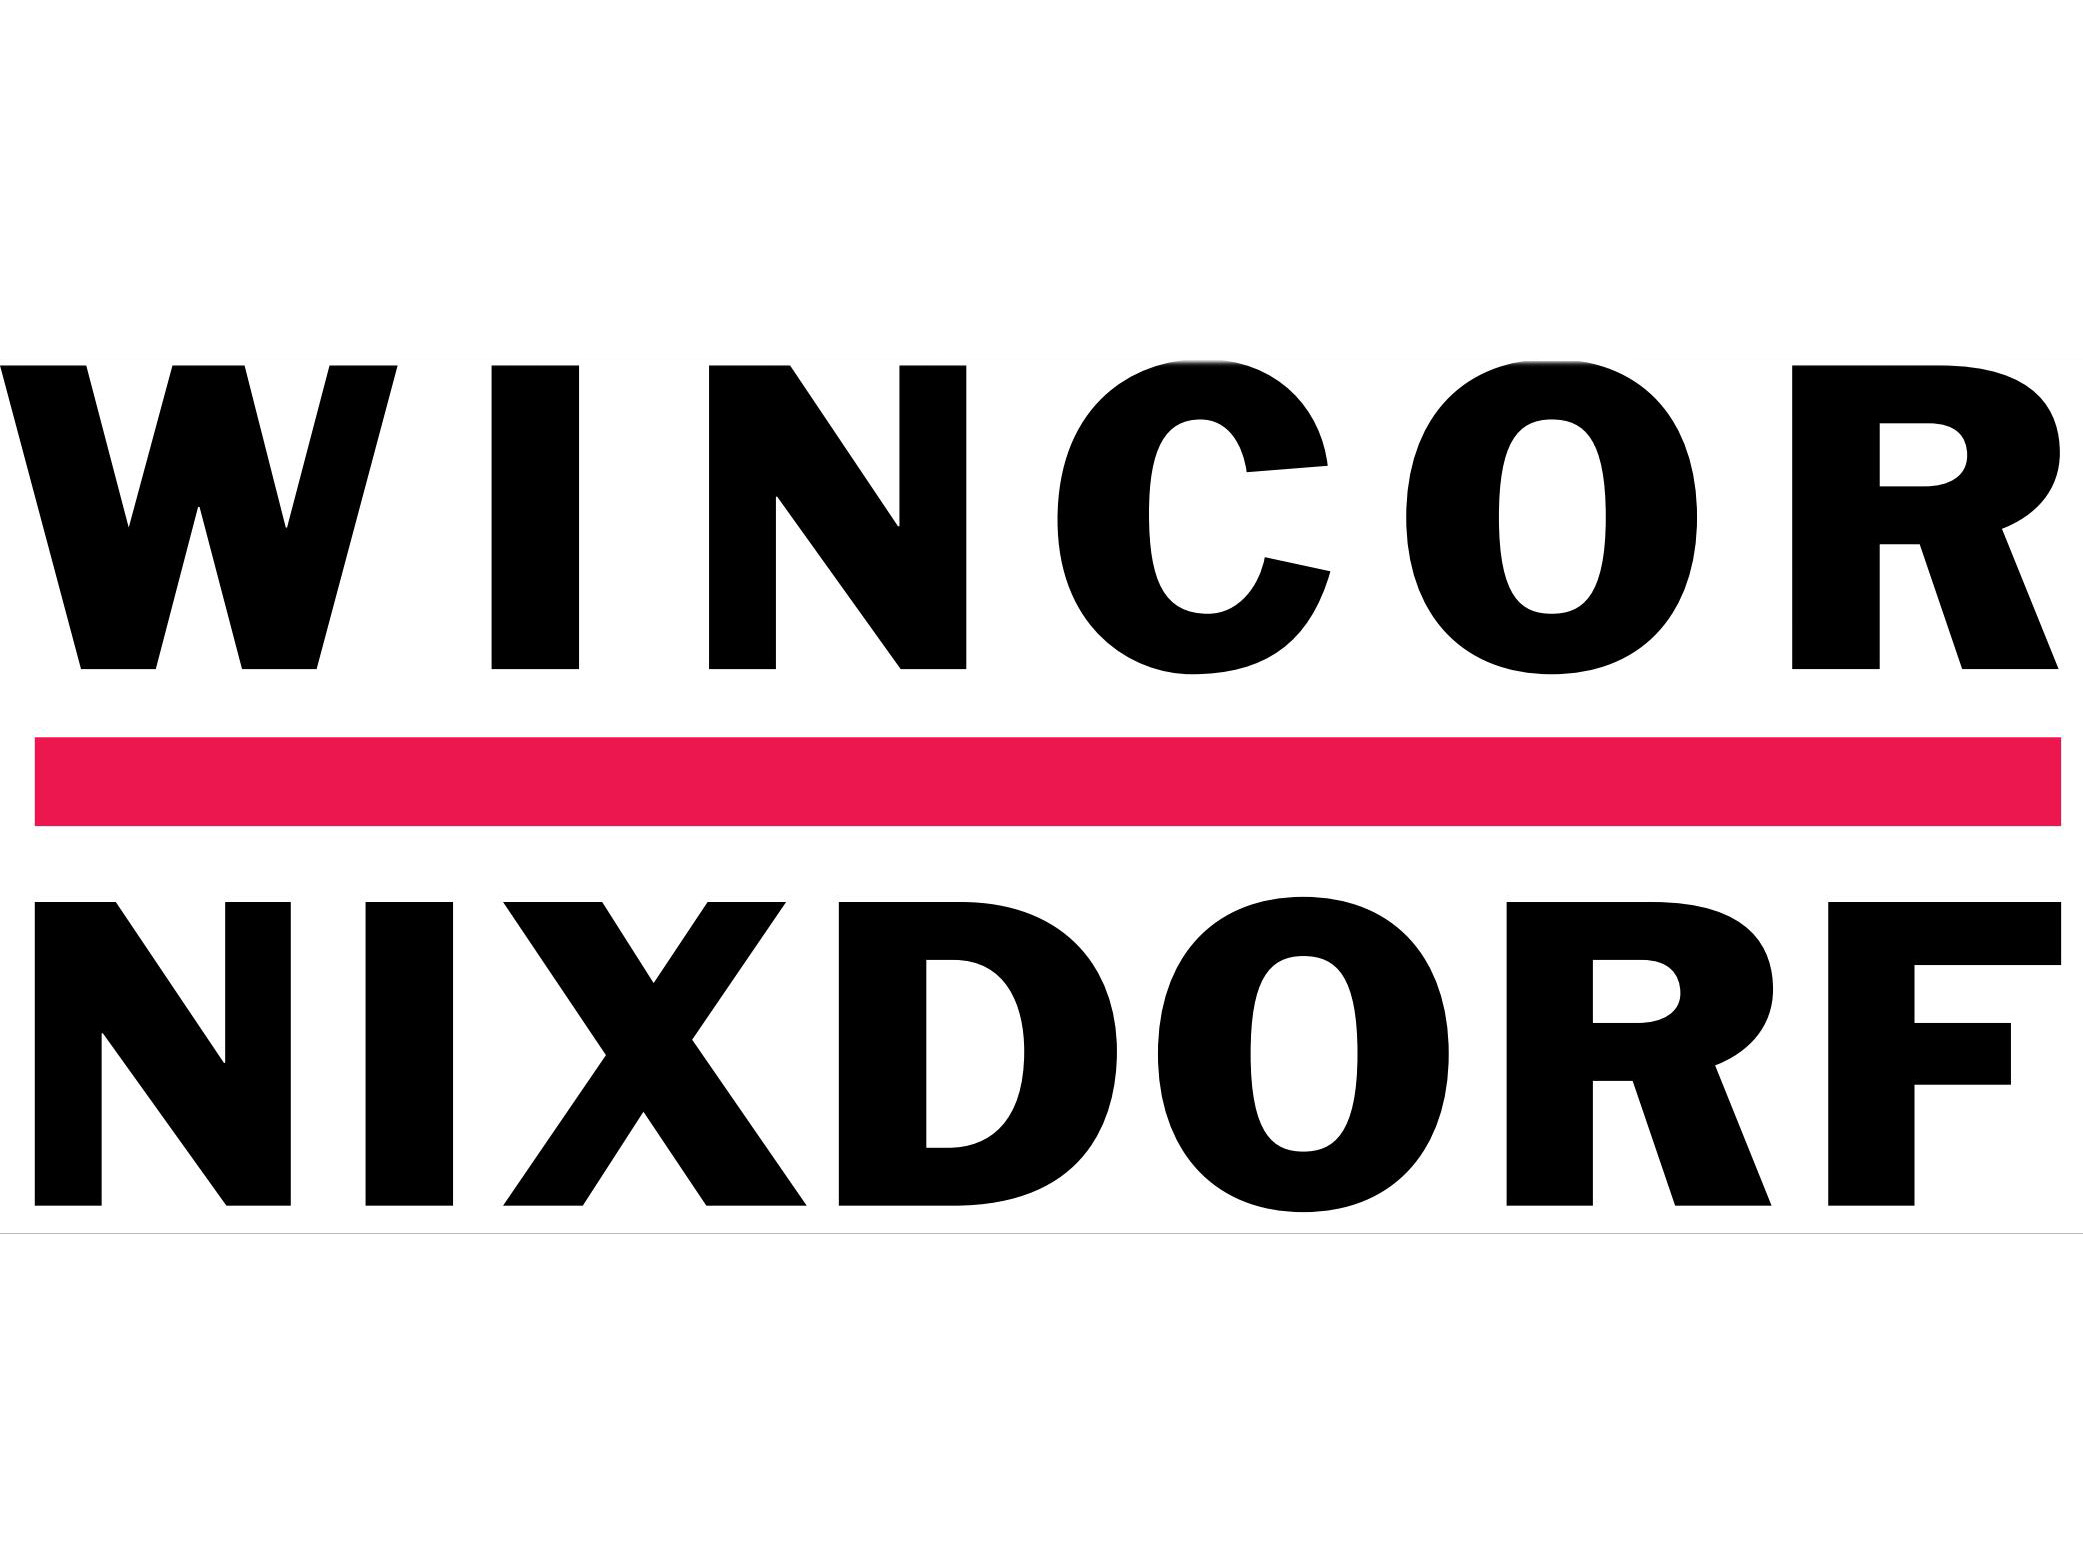 Algerian Post Office awards ATM contract to Wincor Nixdorf